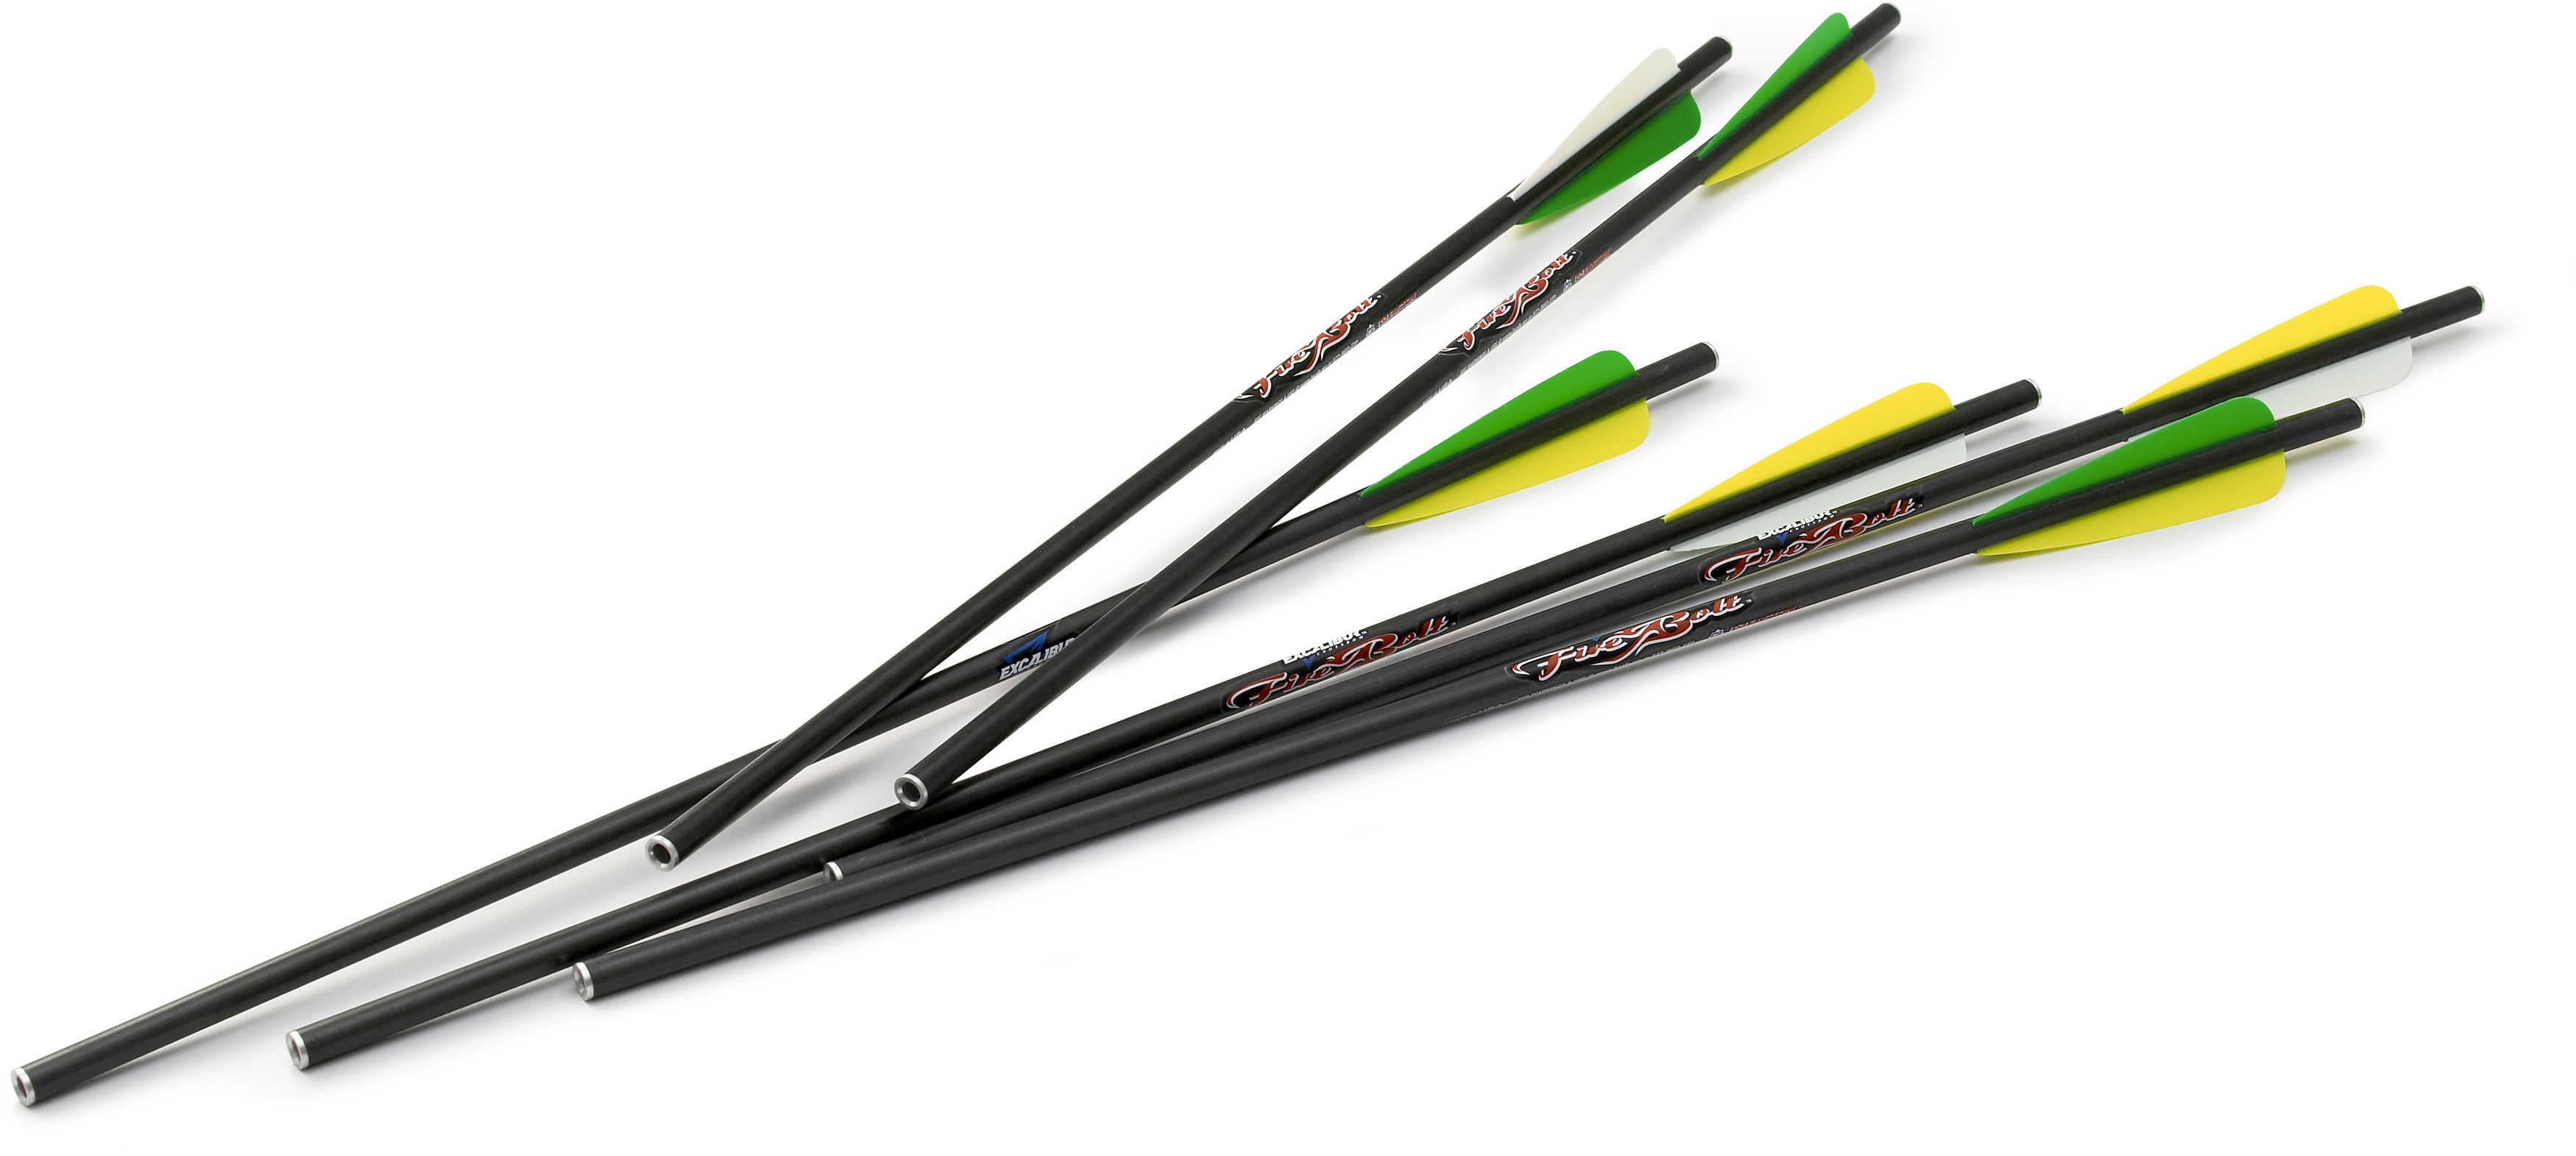 Excalibur Firebolt Carbon Arrows 20 In.6Pk 22CAV-6